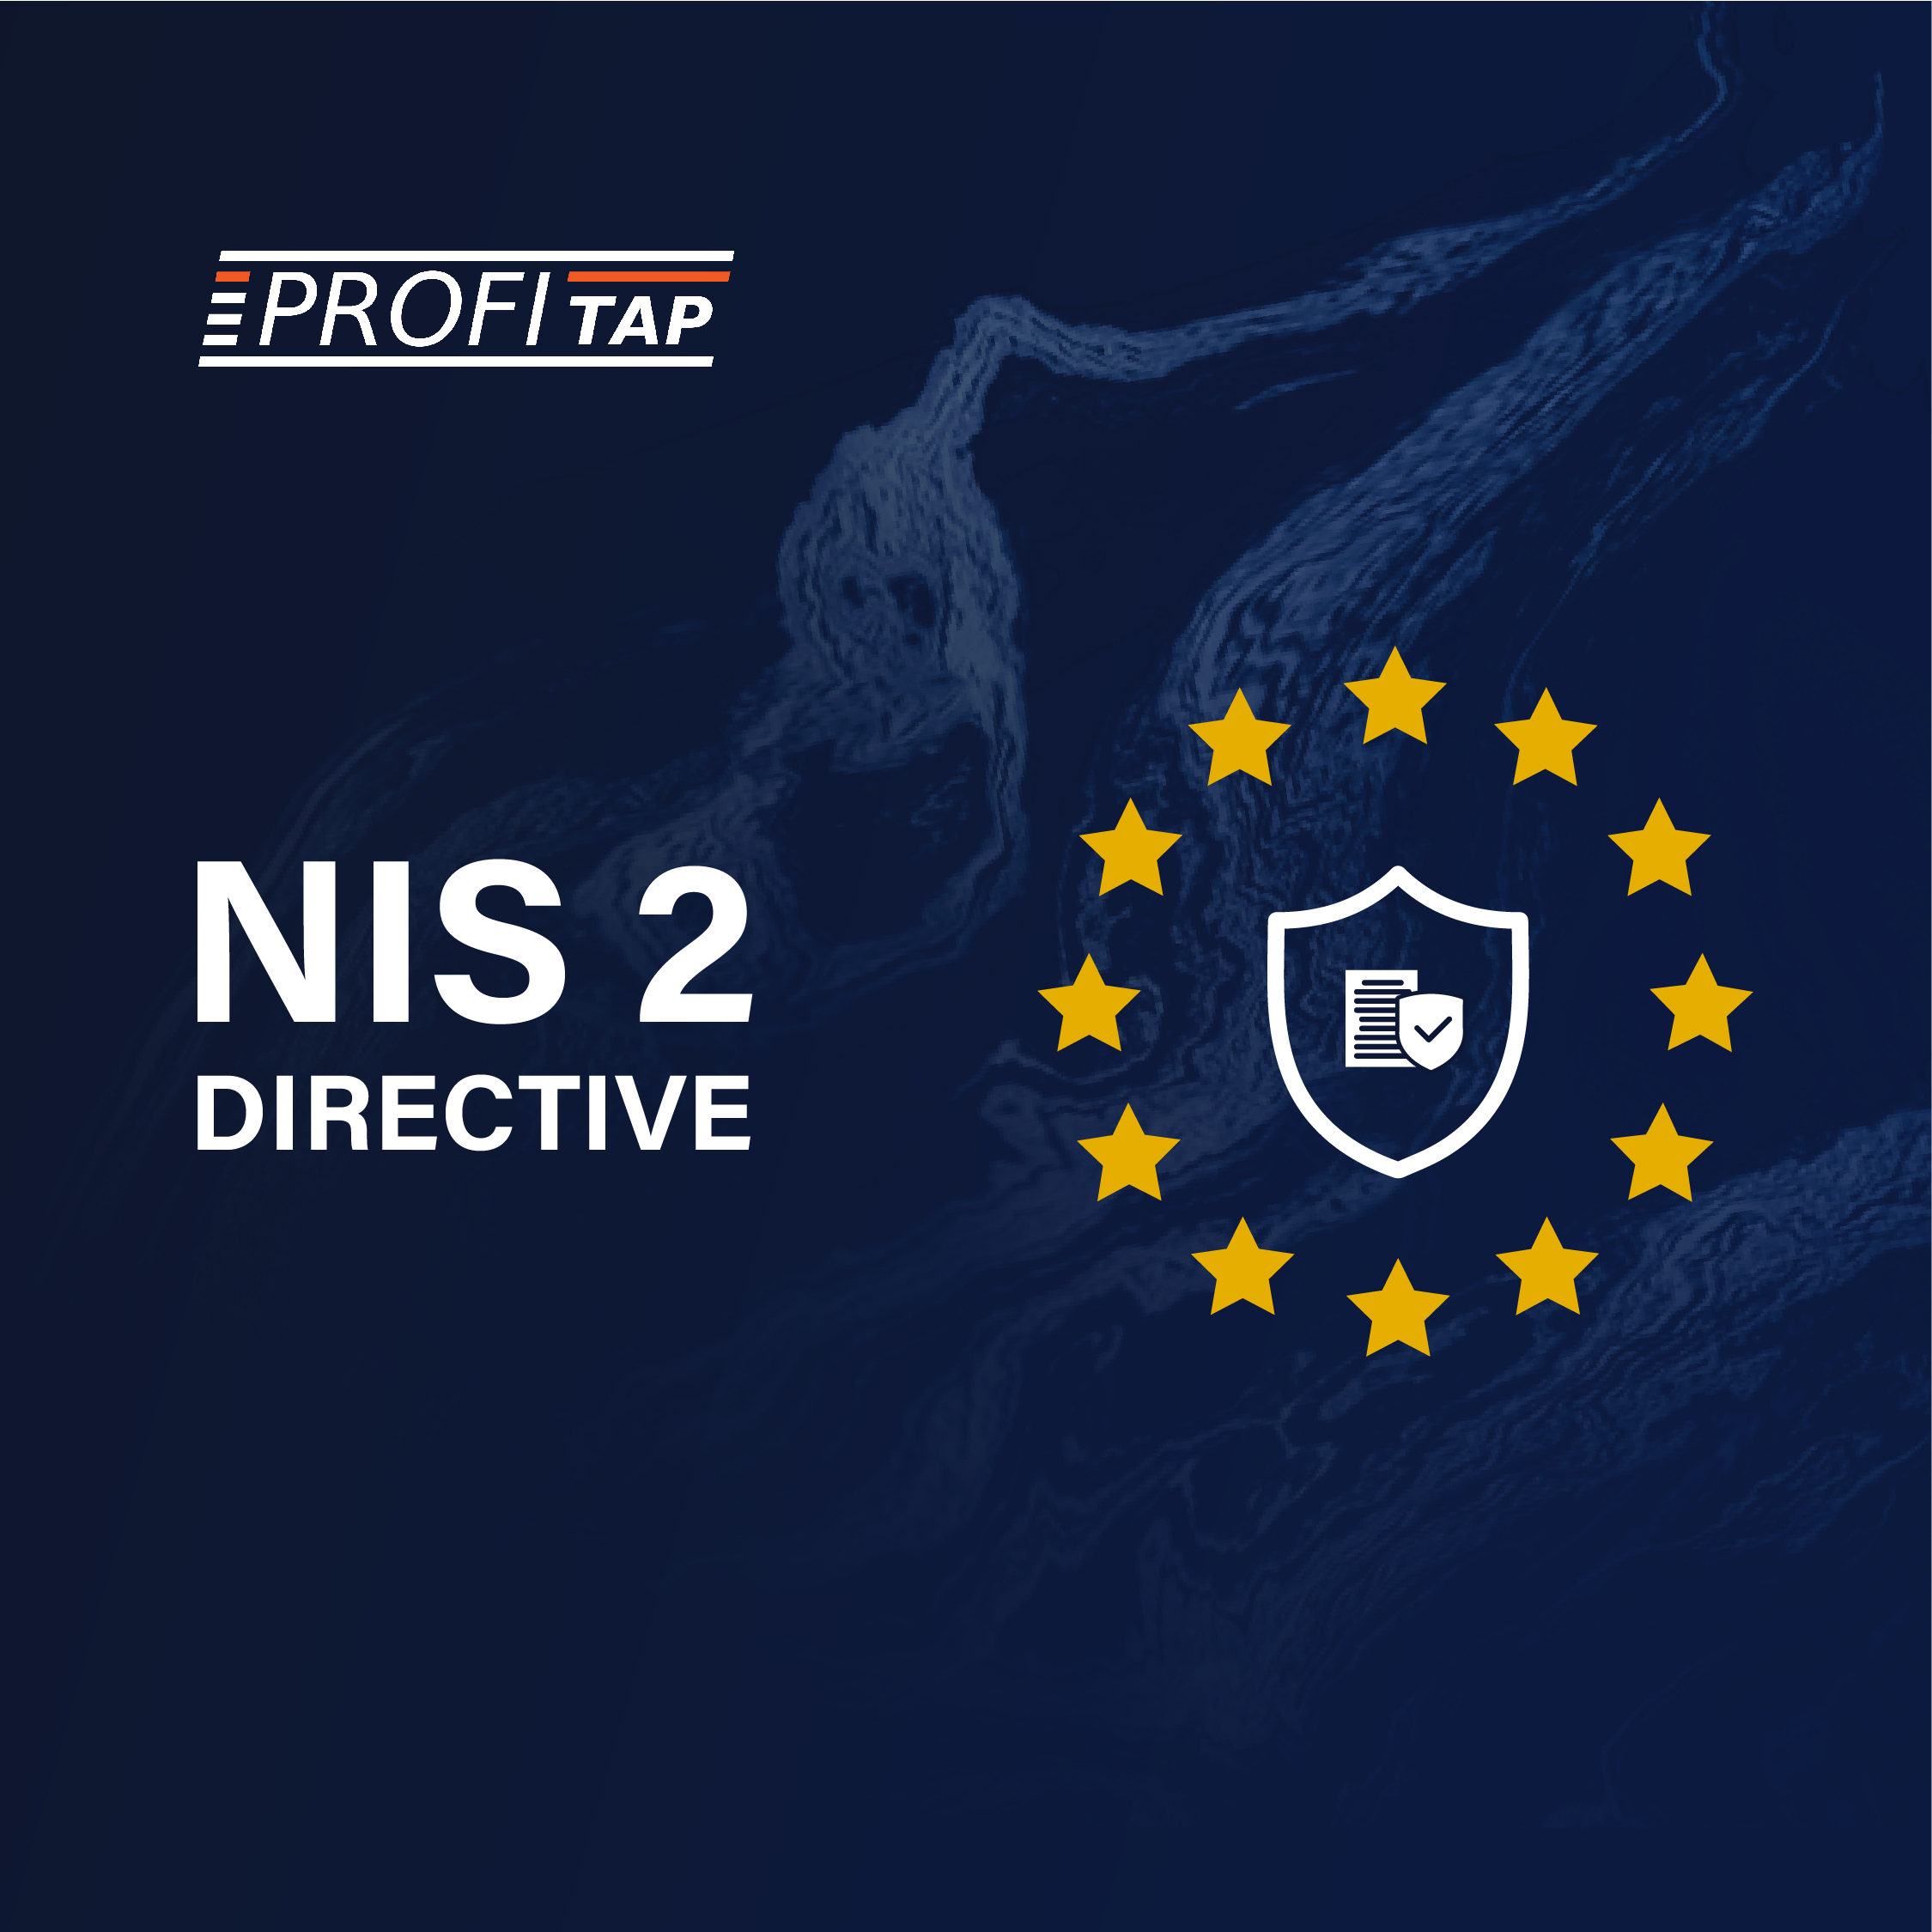 NIS2 compliance: Safeguarding critical network infrastructure